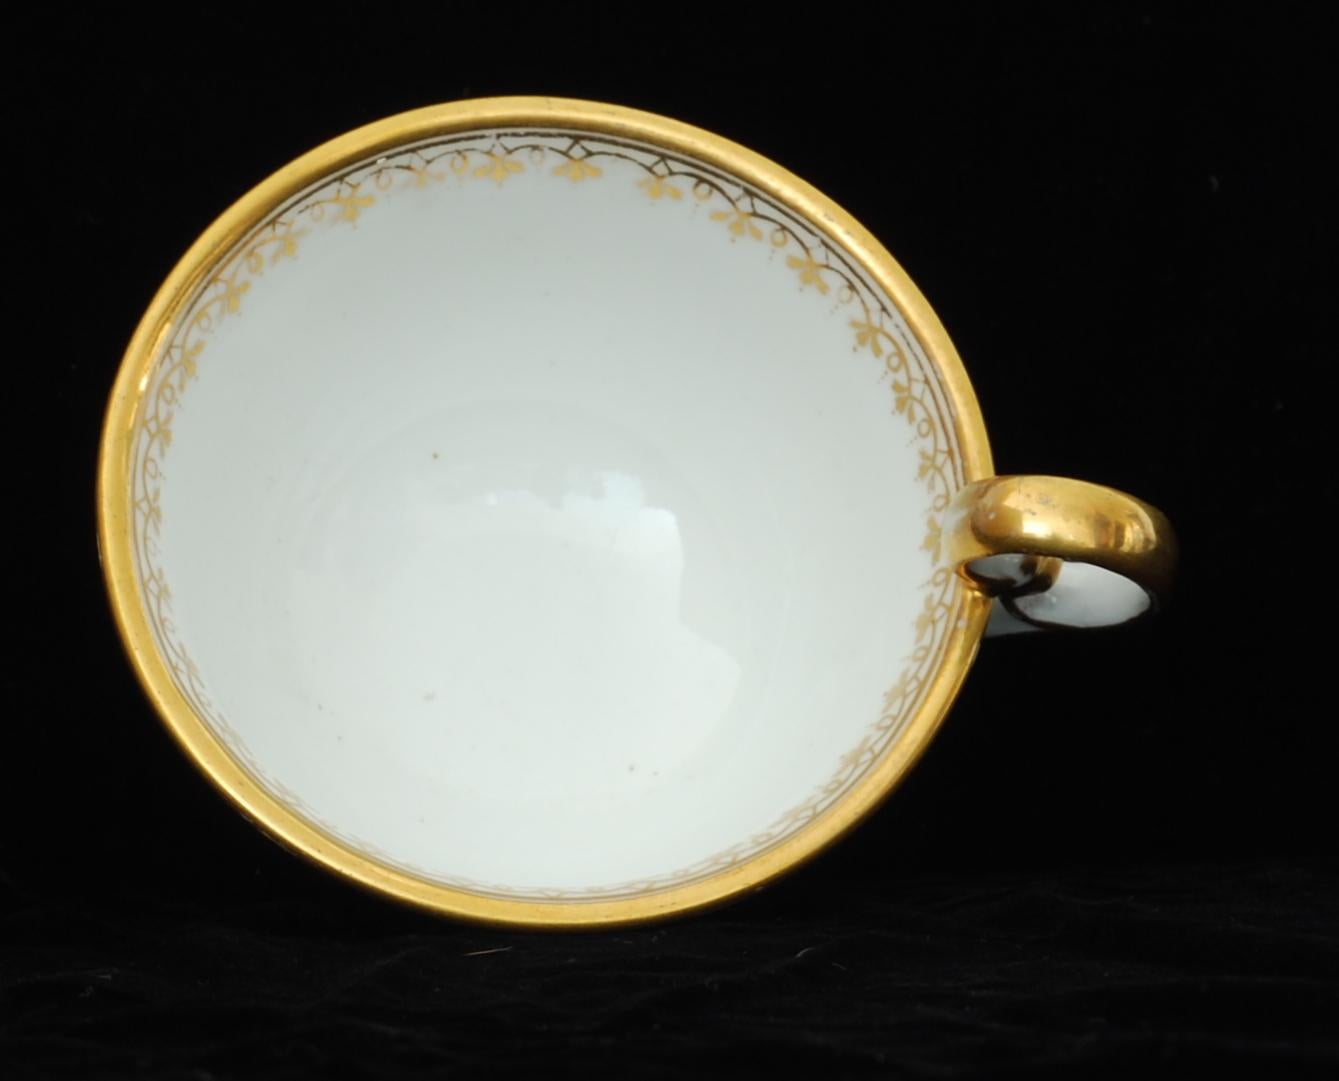 Molded Tea Cup and Saucer Nantgarw Porcelain, circa 1815 For Sale